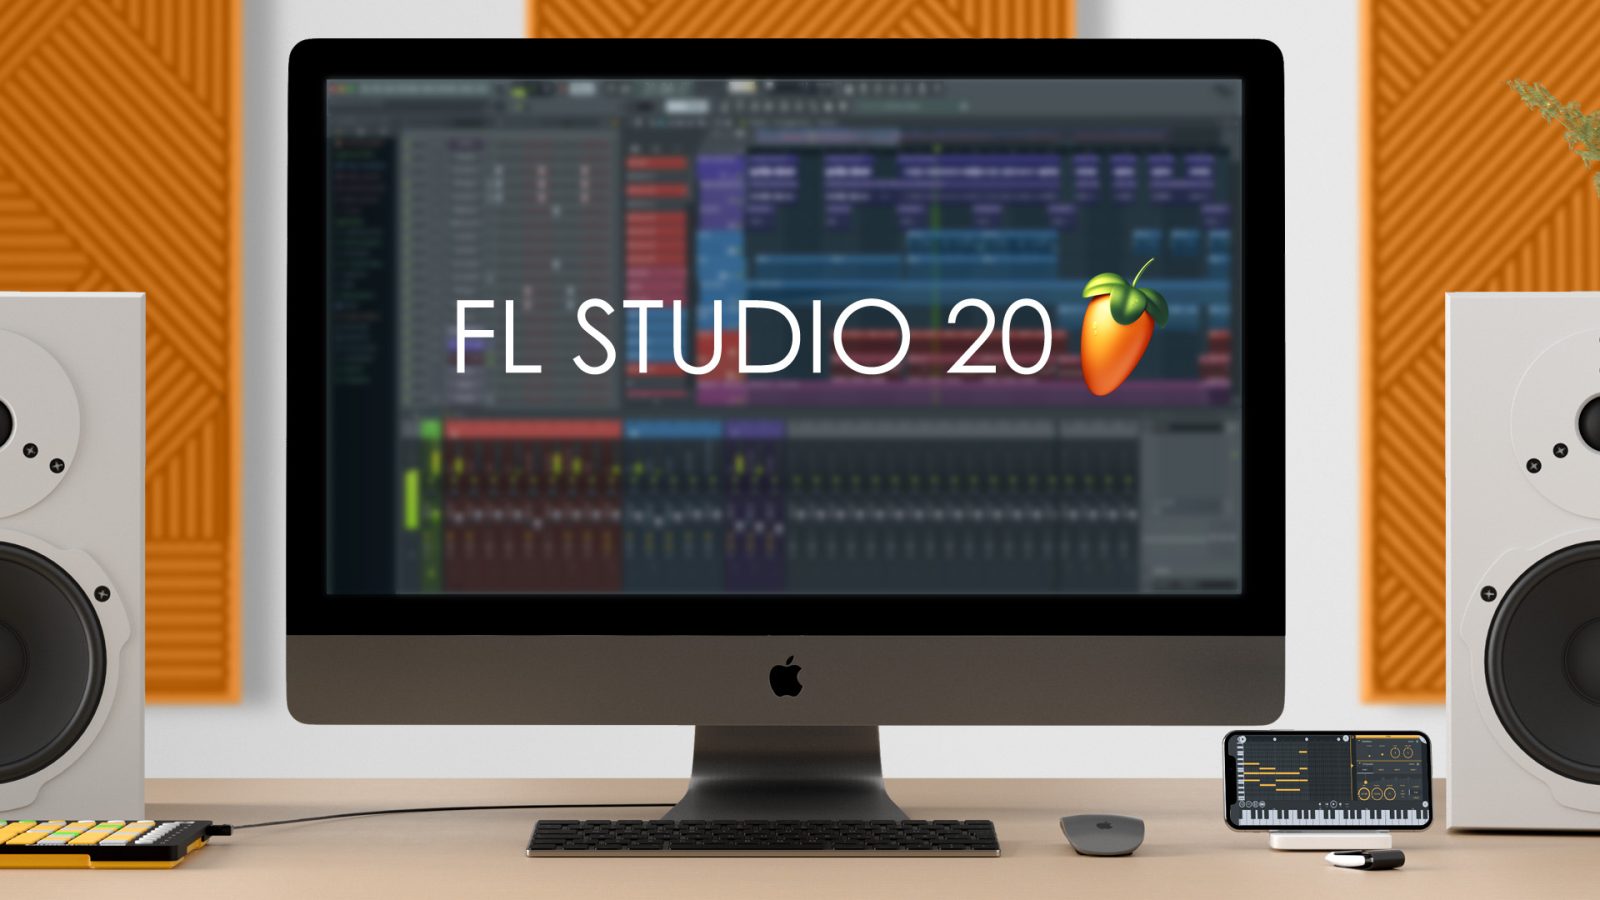 fl studio 21 mac download